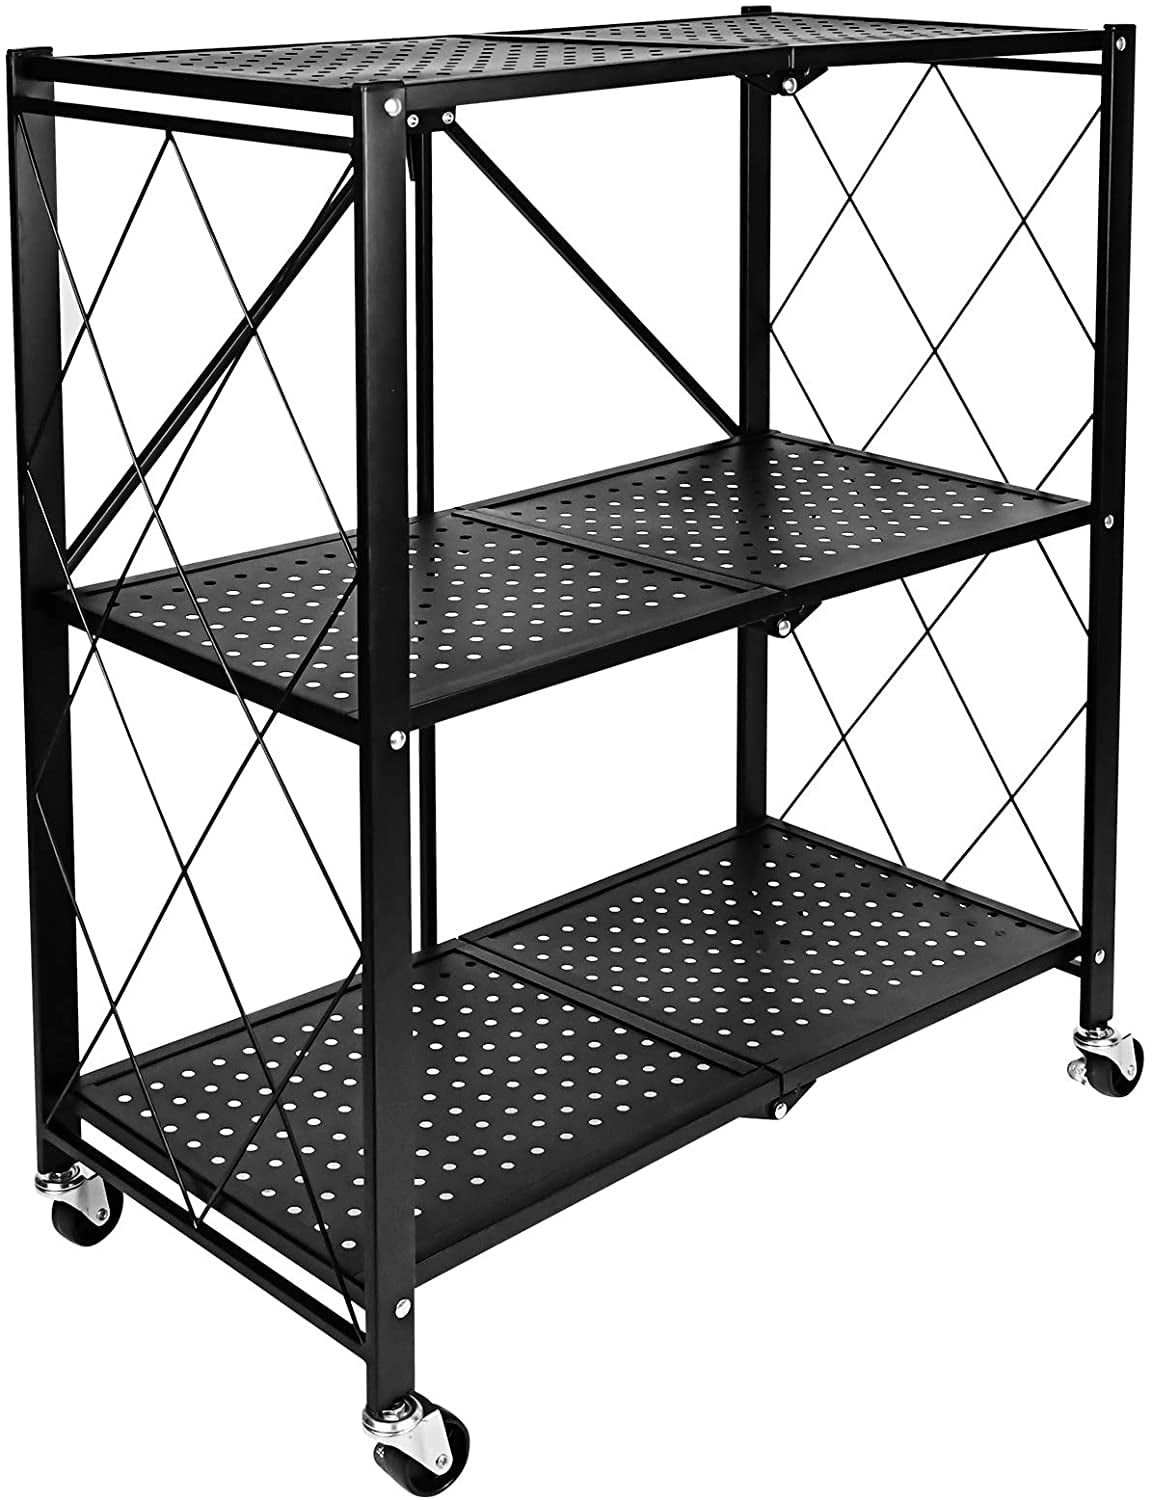 HealSmart 3-Tier Heavy Duty Foldable Metal Rack Storage Shelving Unit with Wheels, Up to 750 lbs Capacity, Black